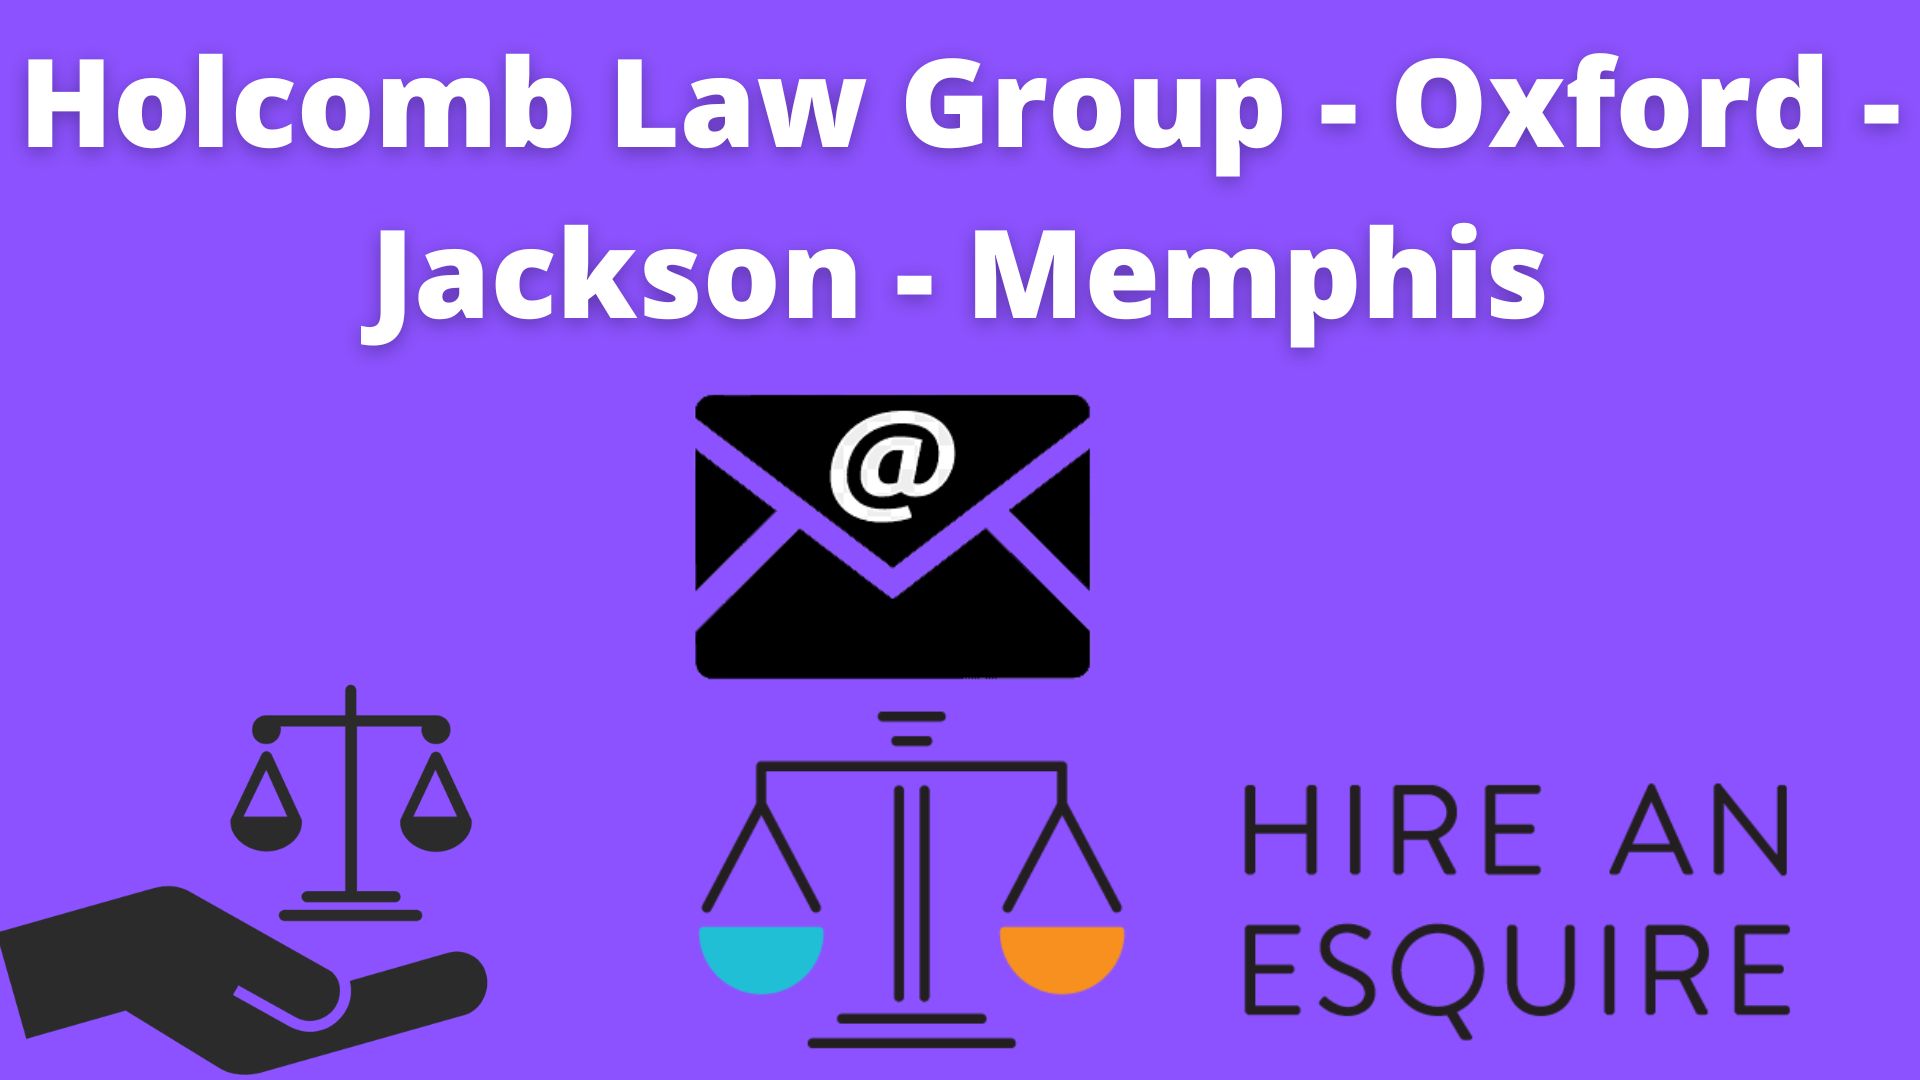 Holcomb law group - oxford - jackson - memphis 2022